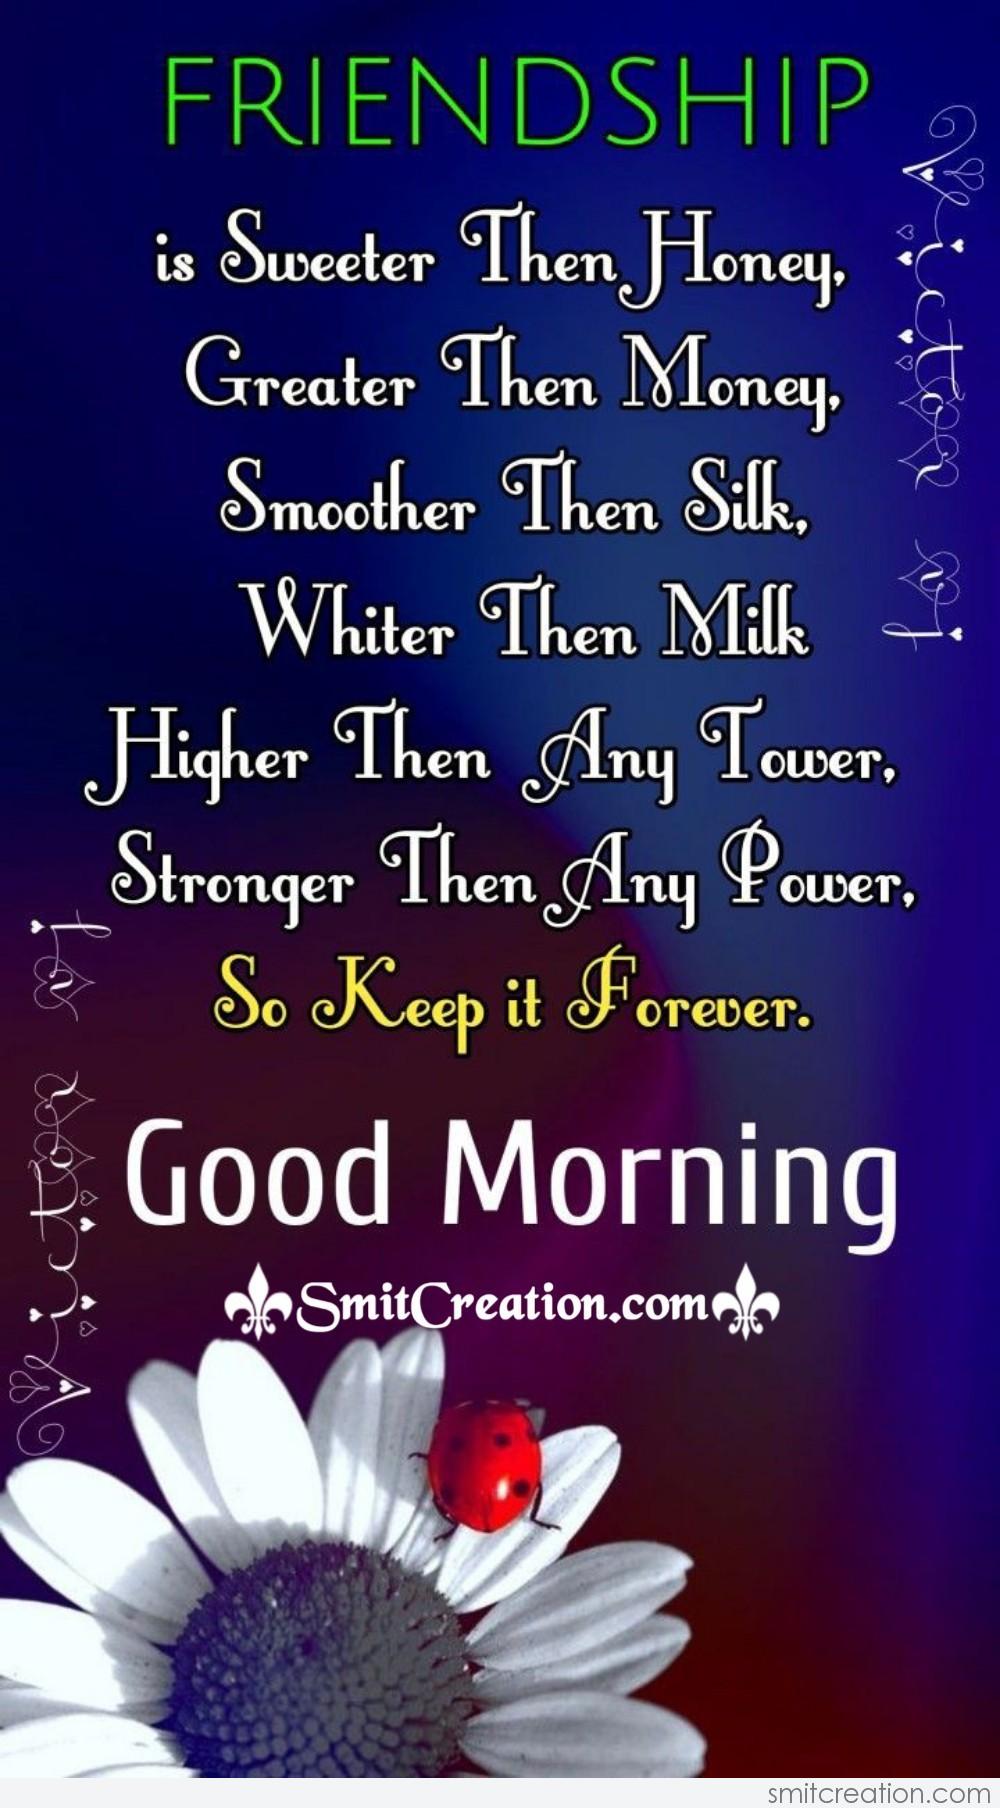 Good Morning Friendship Quote - SmitCreation.com